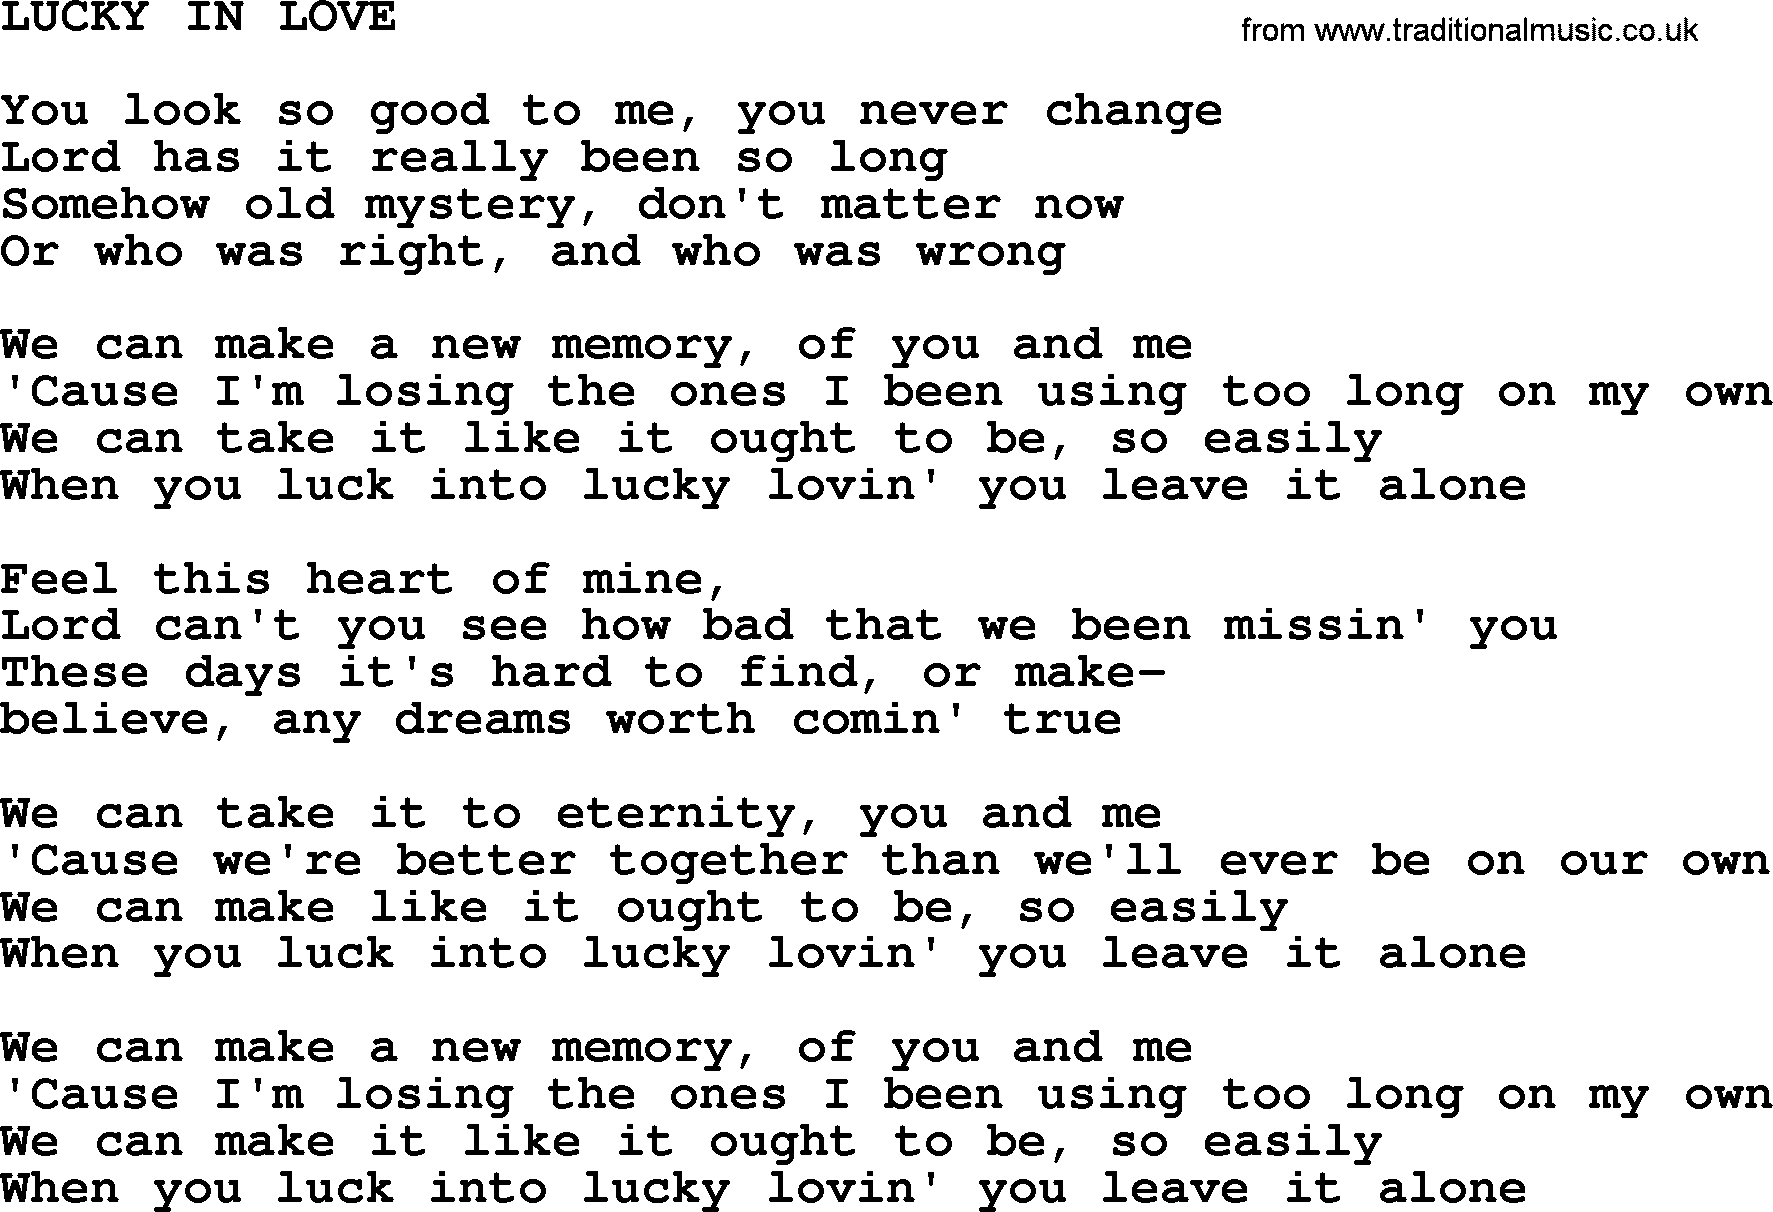 Kris Kristofferson song: Lucky In Love lyrics